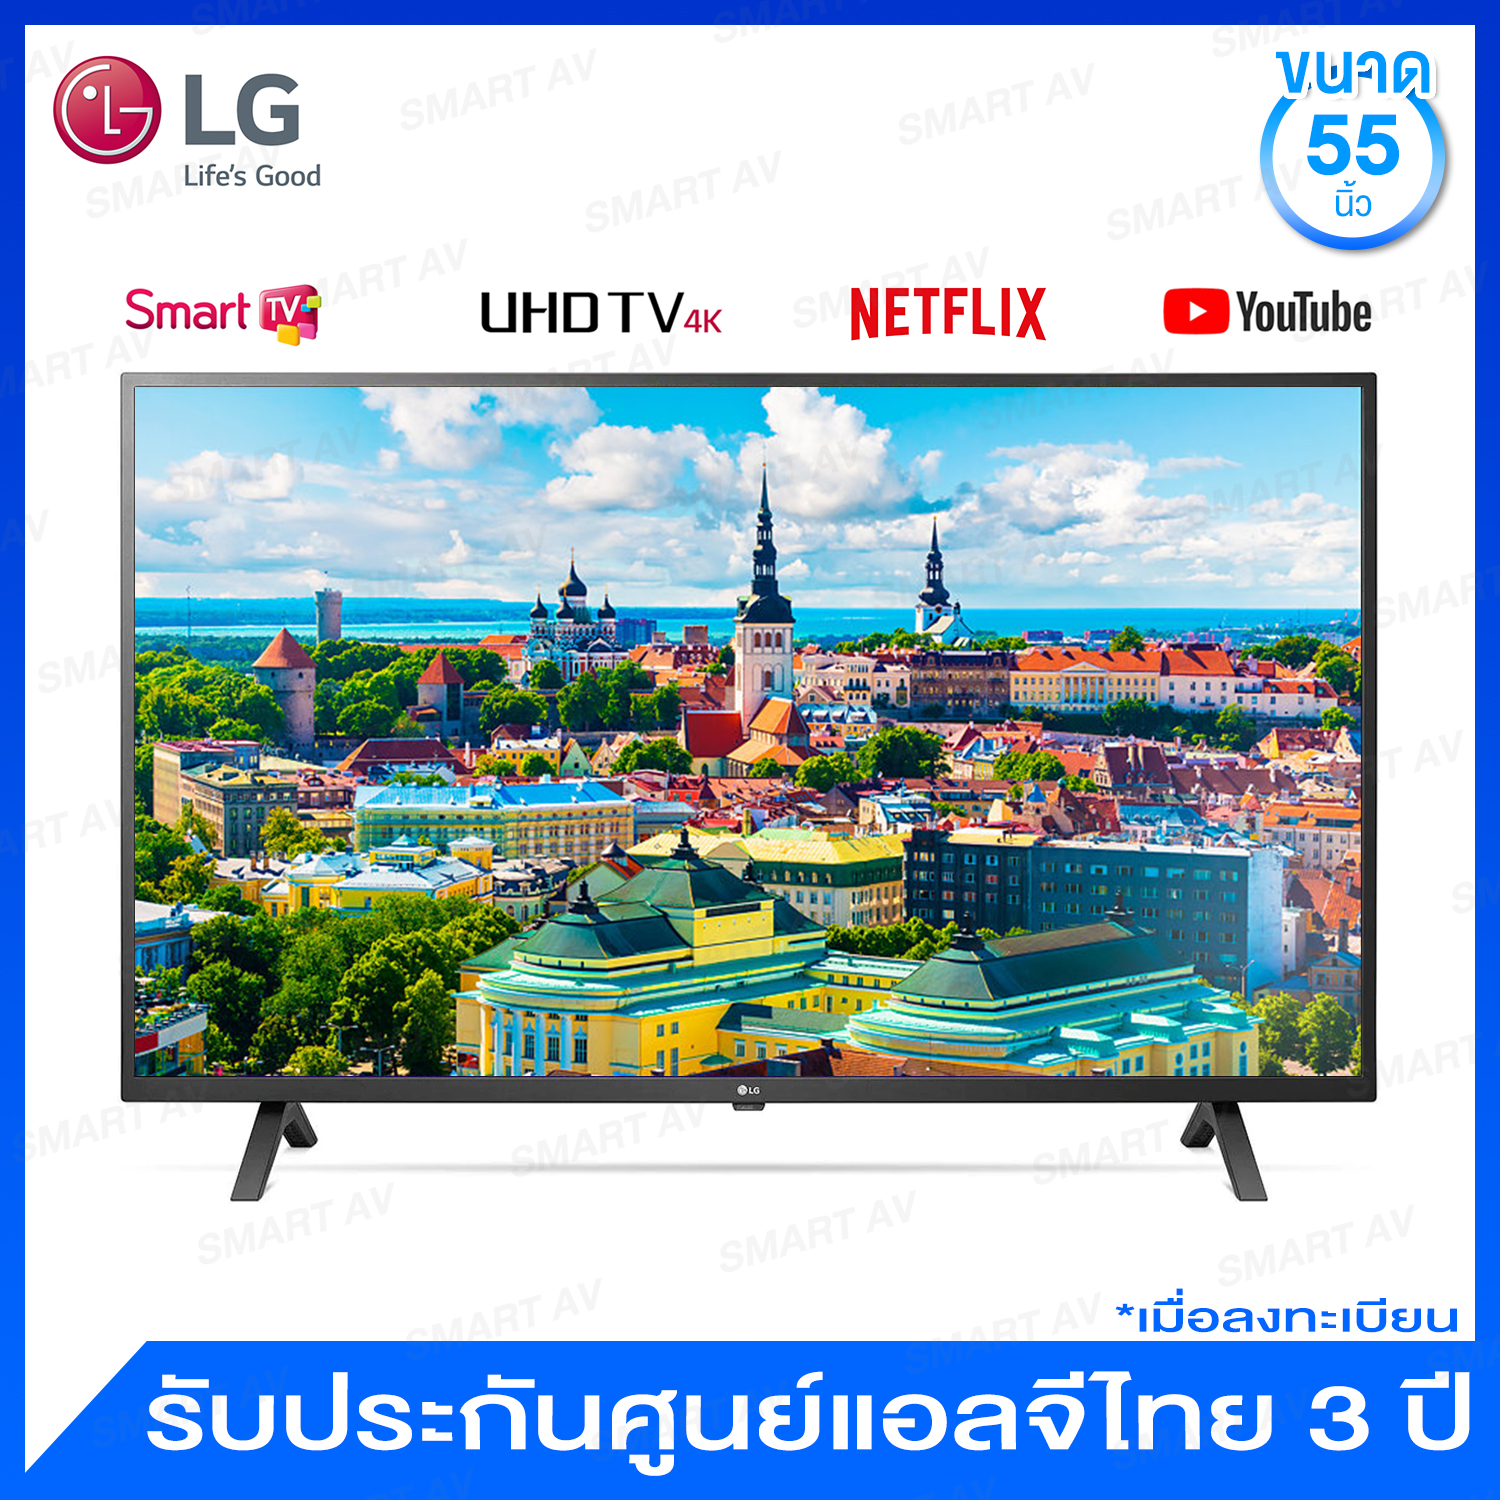 LG UHD 4K Smart TV ขนาด 55